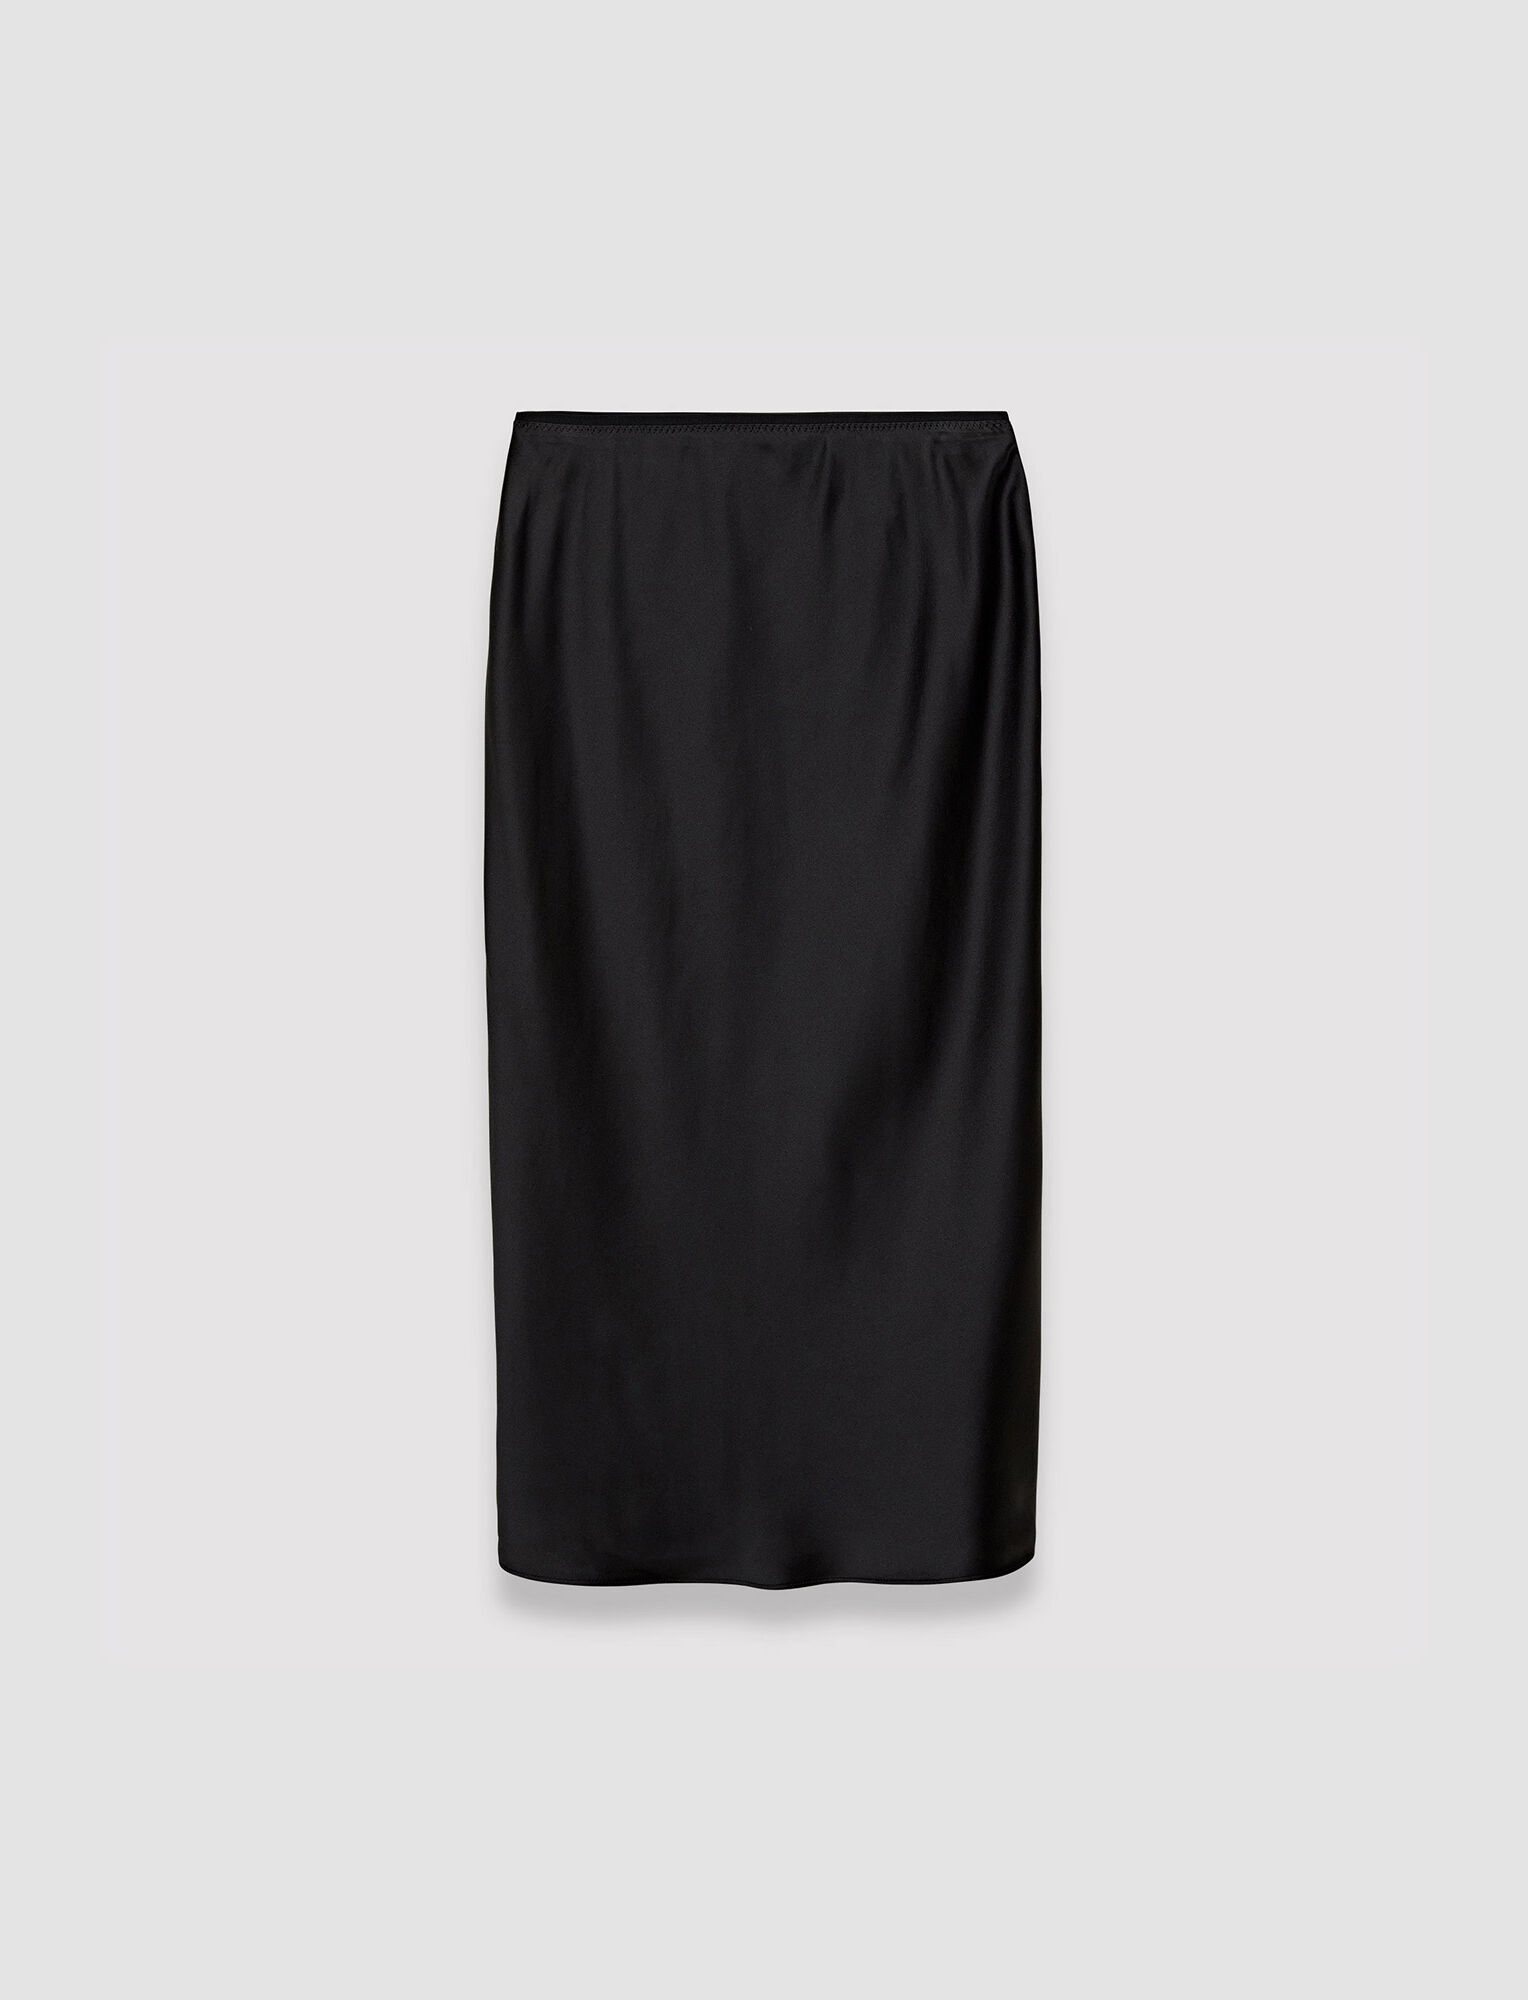 Joseph, Silk Satin Isaak Skirt, in BLACK